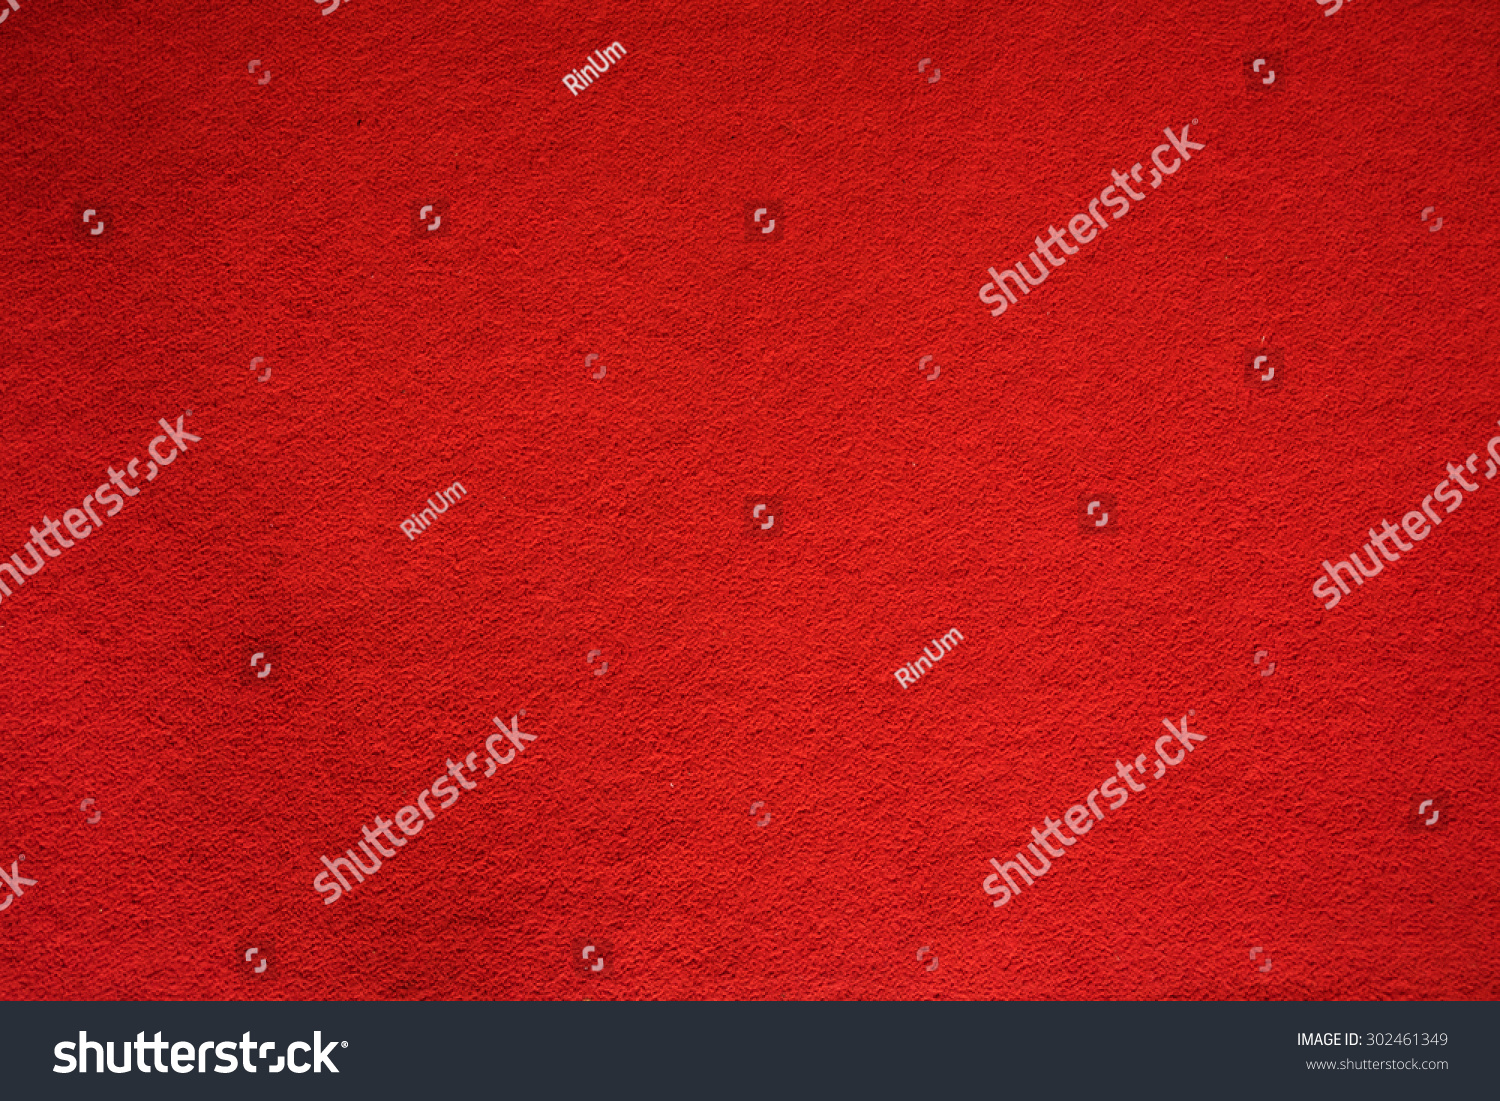 Red Carpet Texture #302461349